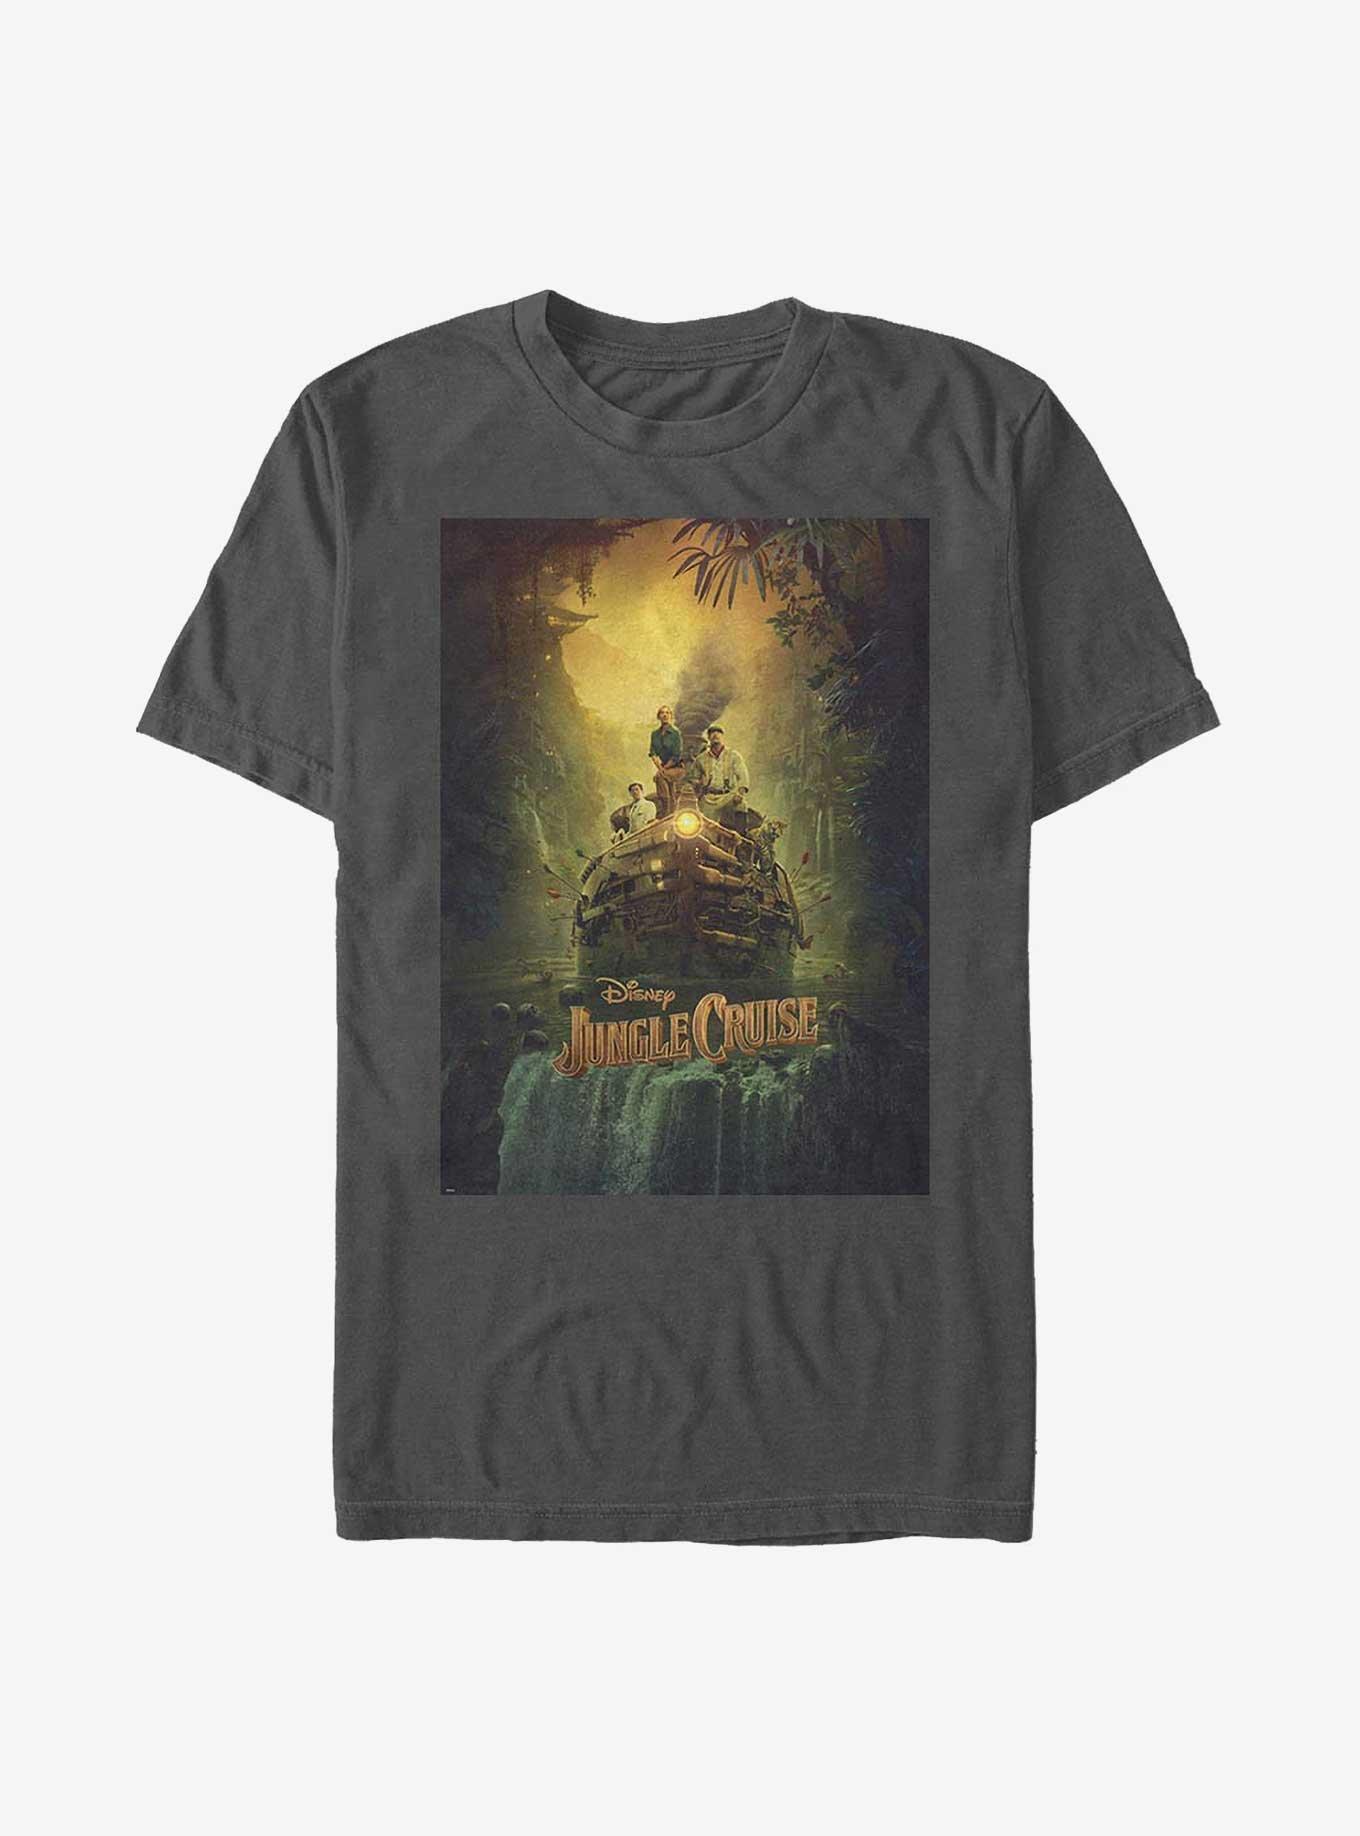 Disney Jungle Cruise Poster T-Shirt, CHARCOAL, hi-res